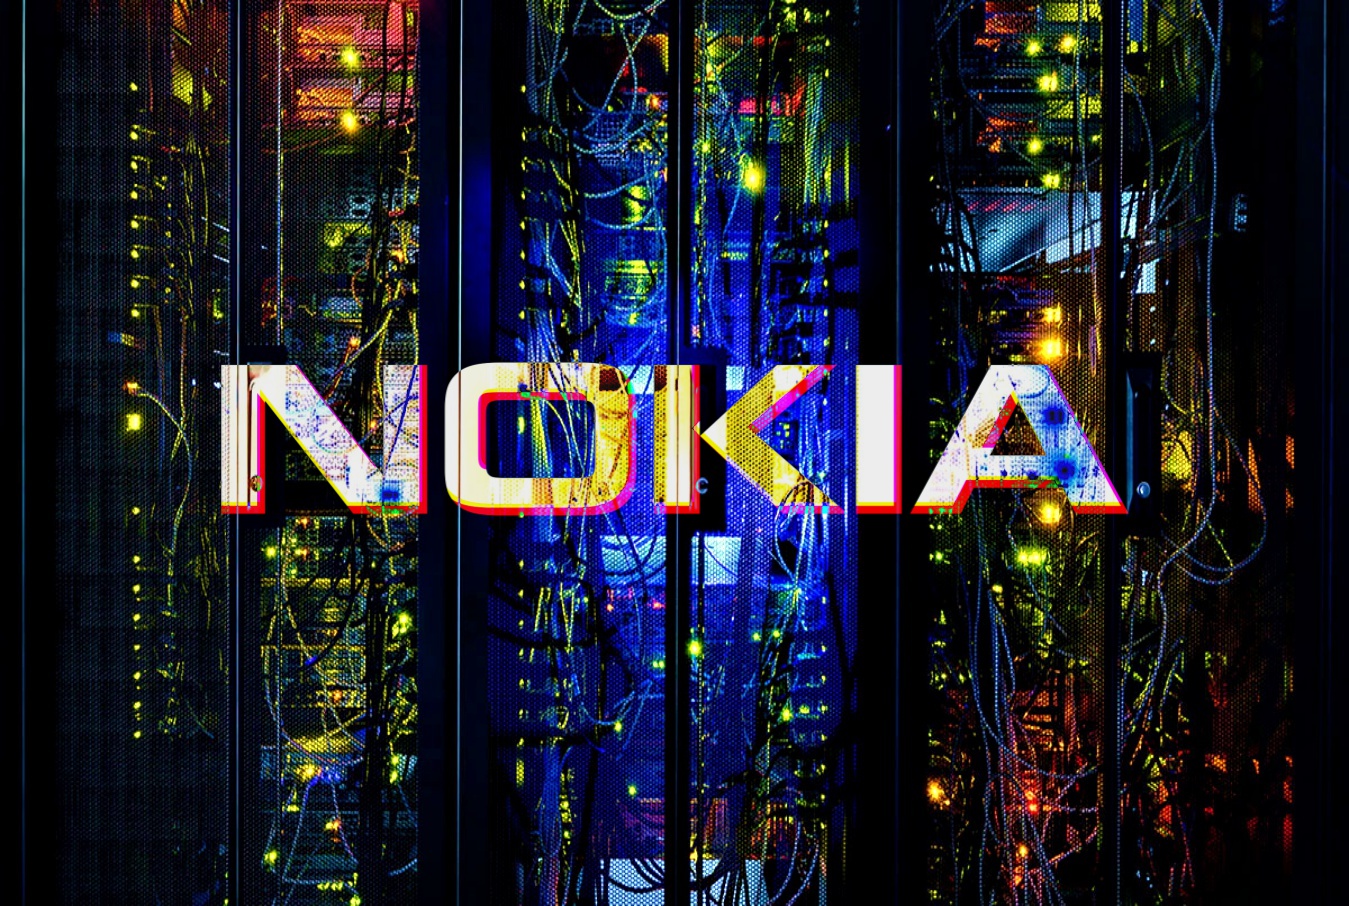 Nokia exposes passwords & secret access keys